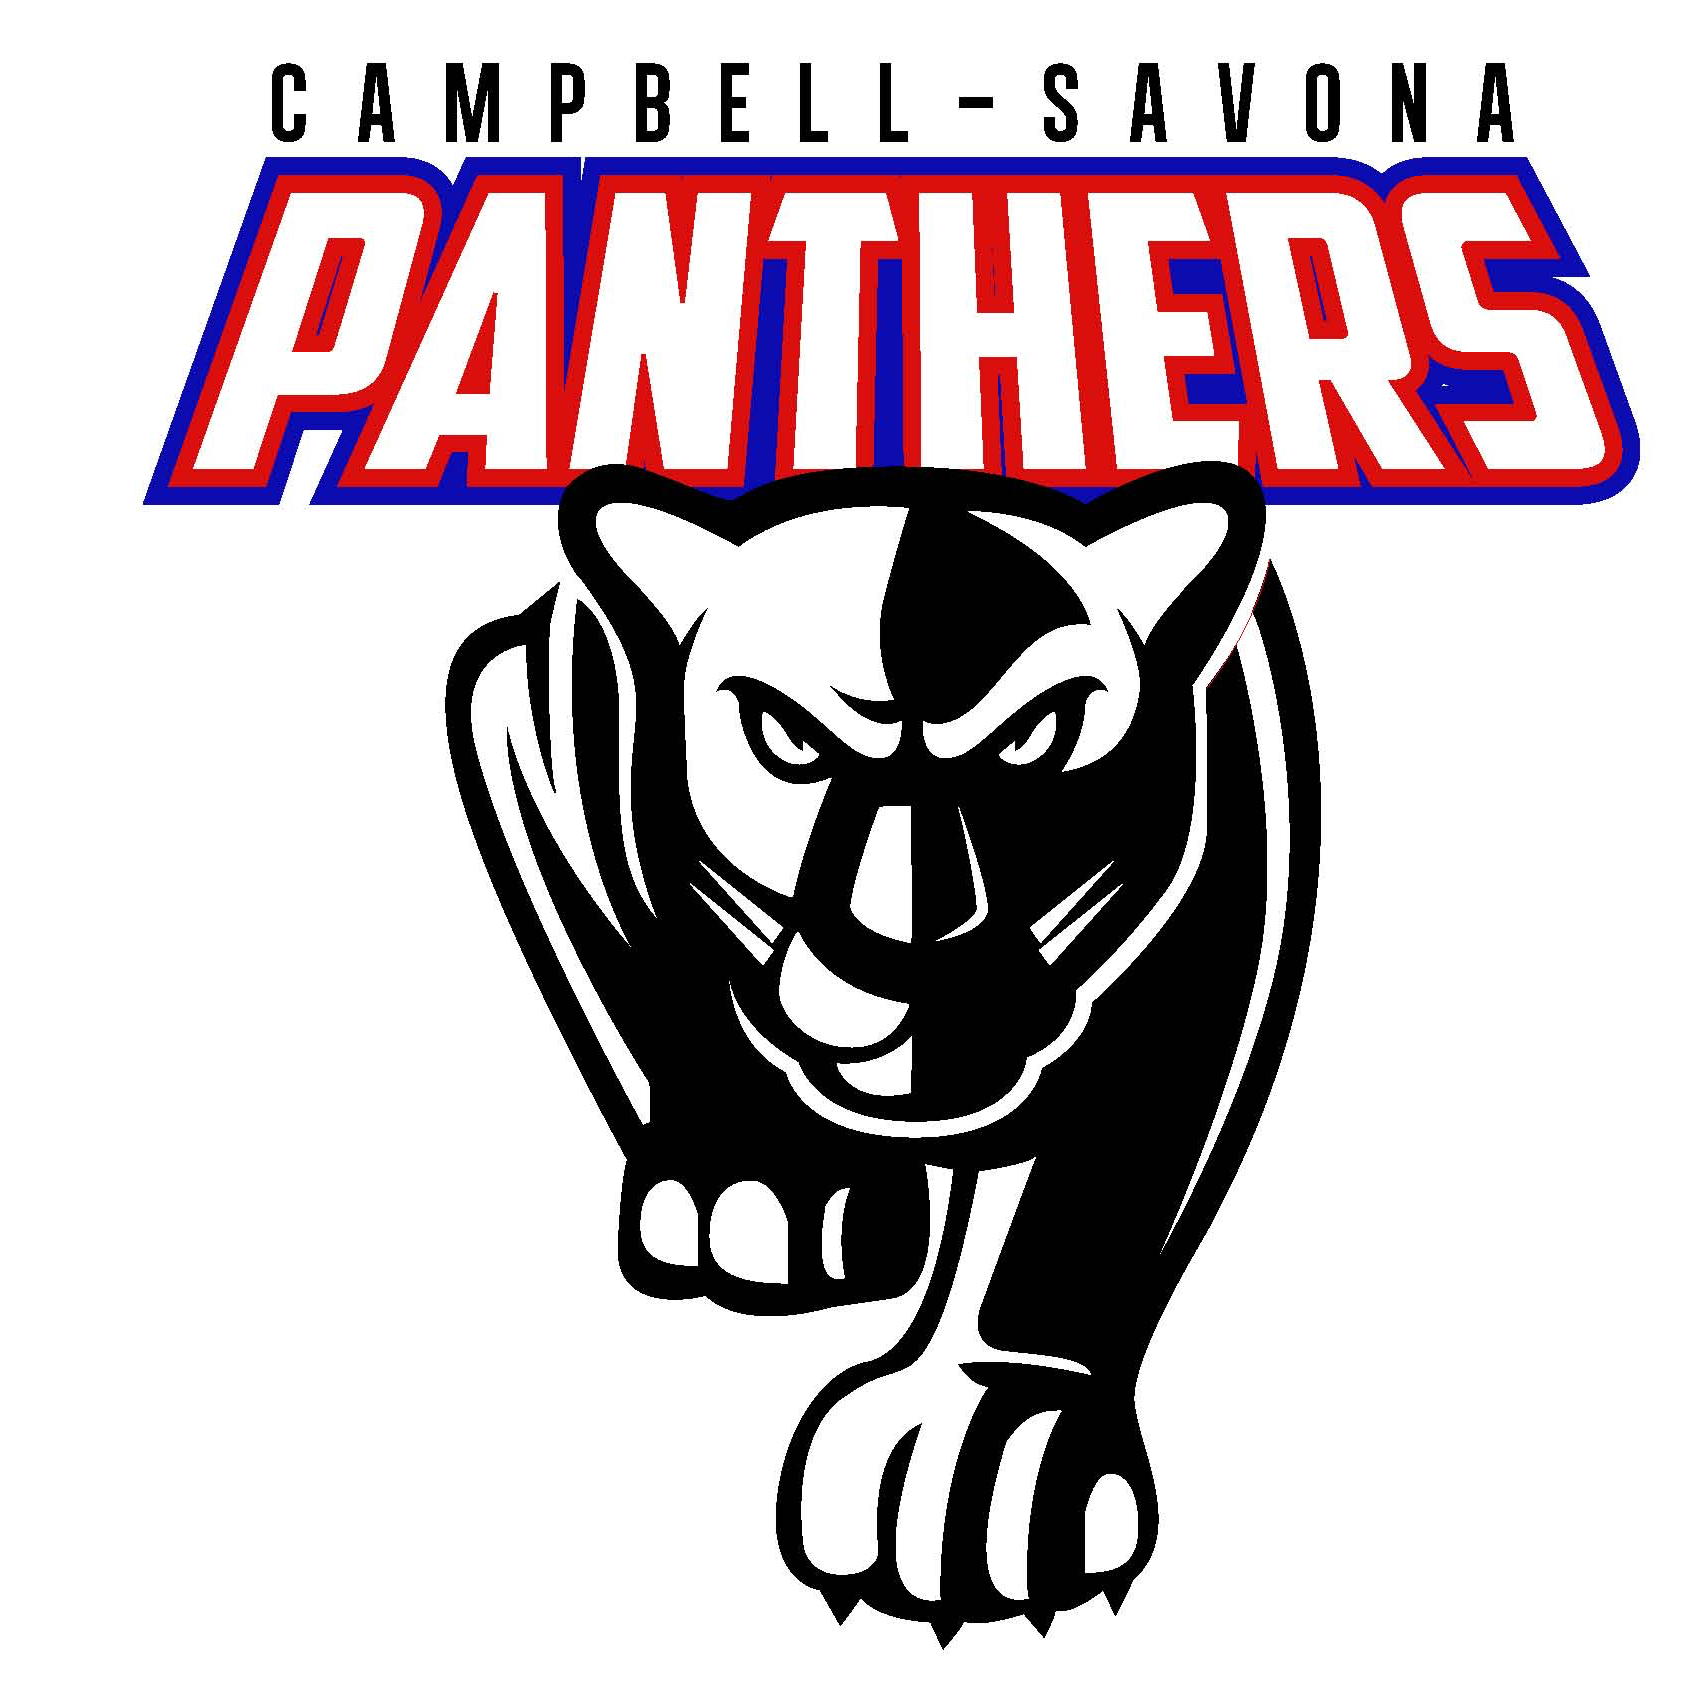 Campbell-Savona Central School